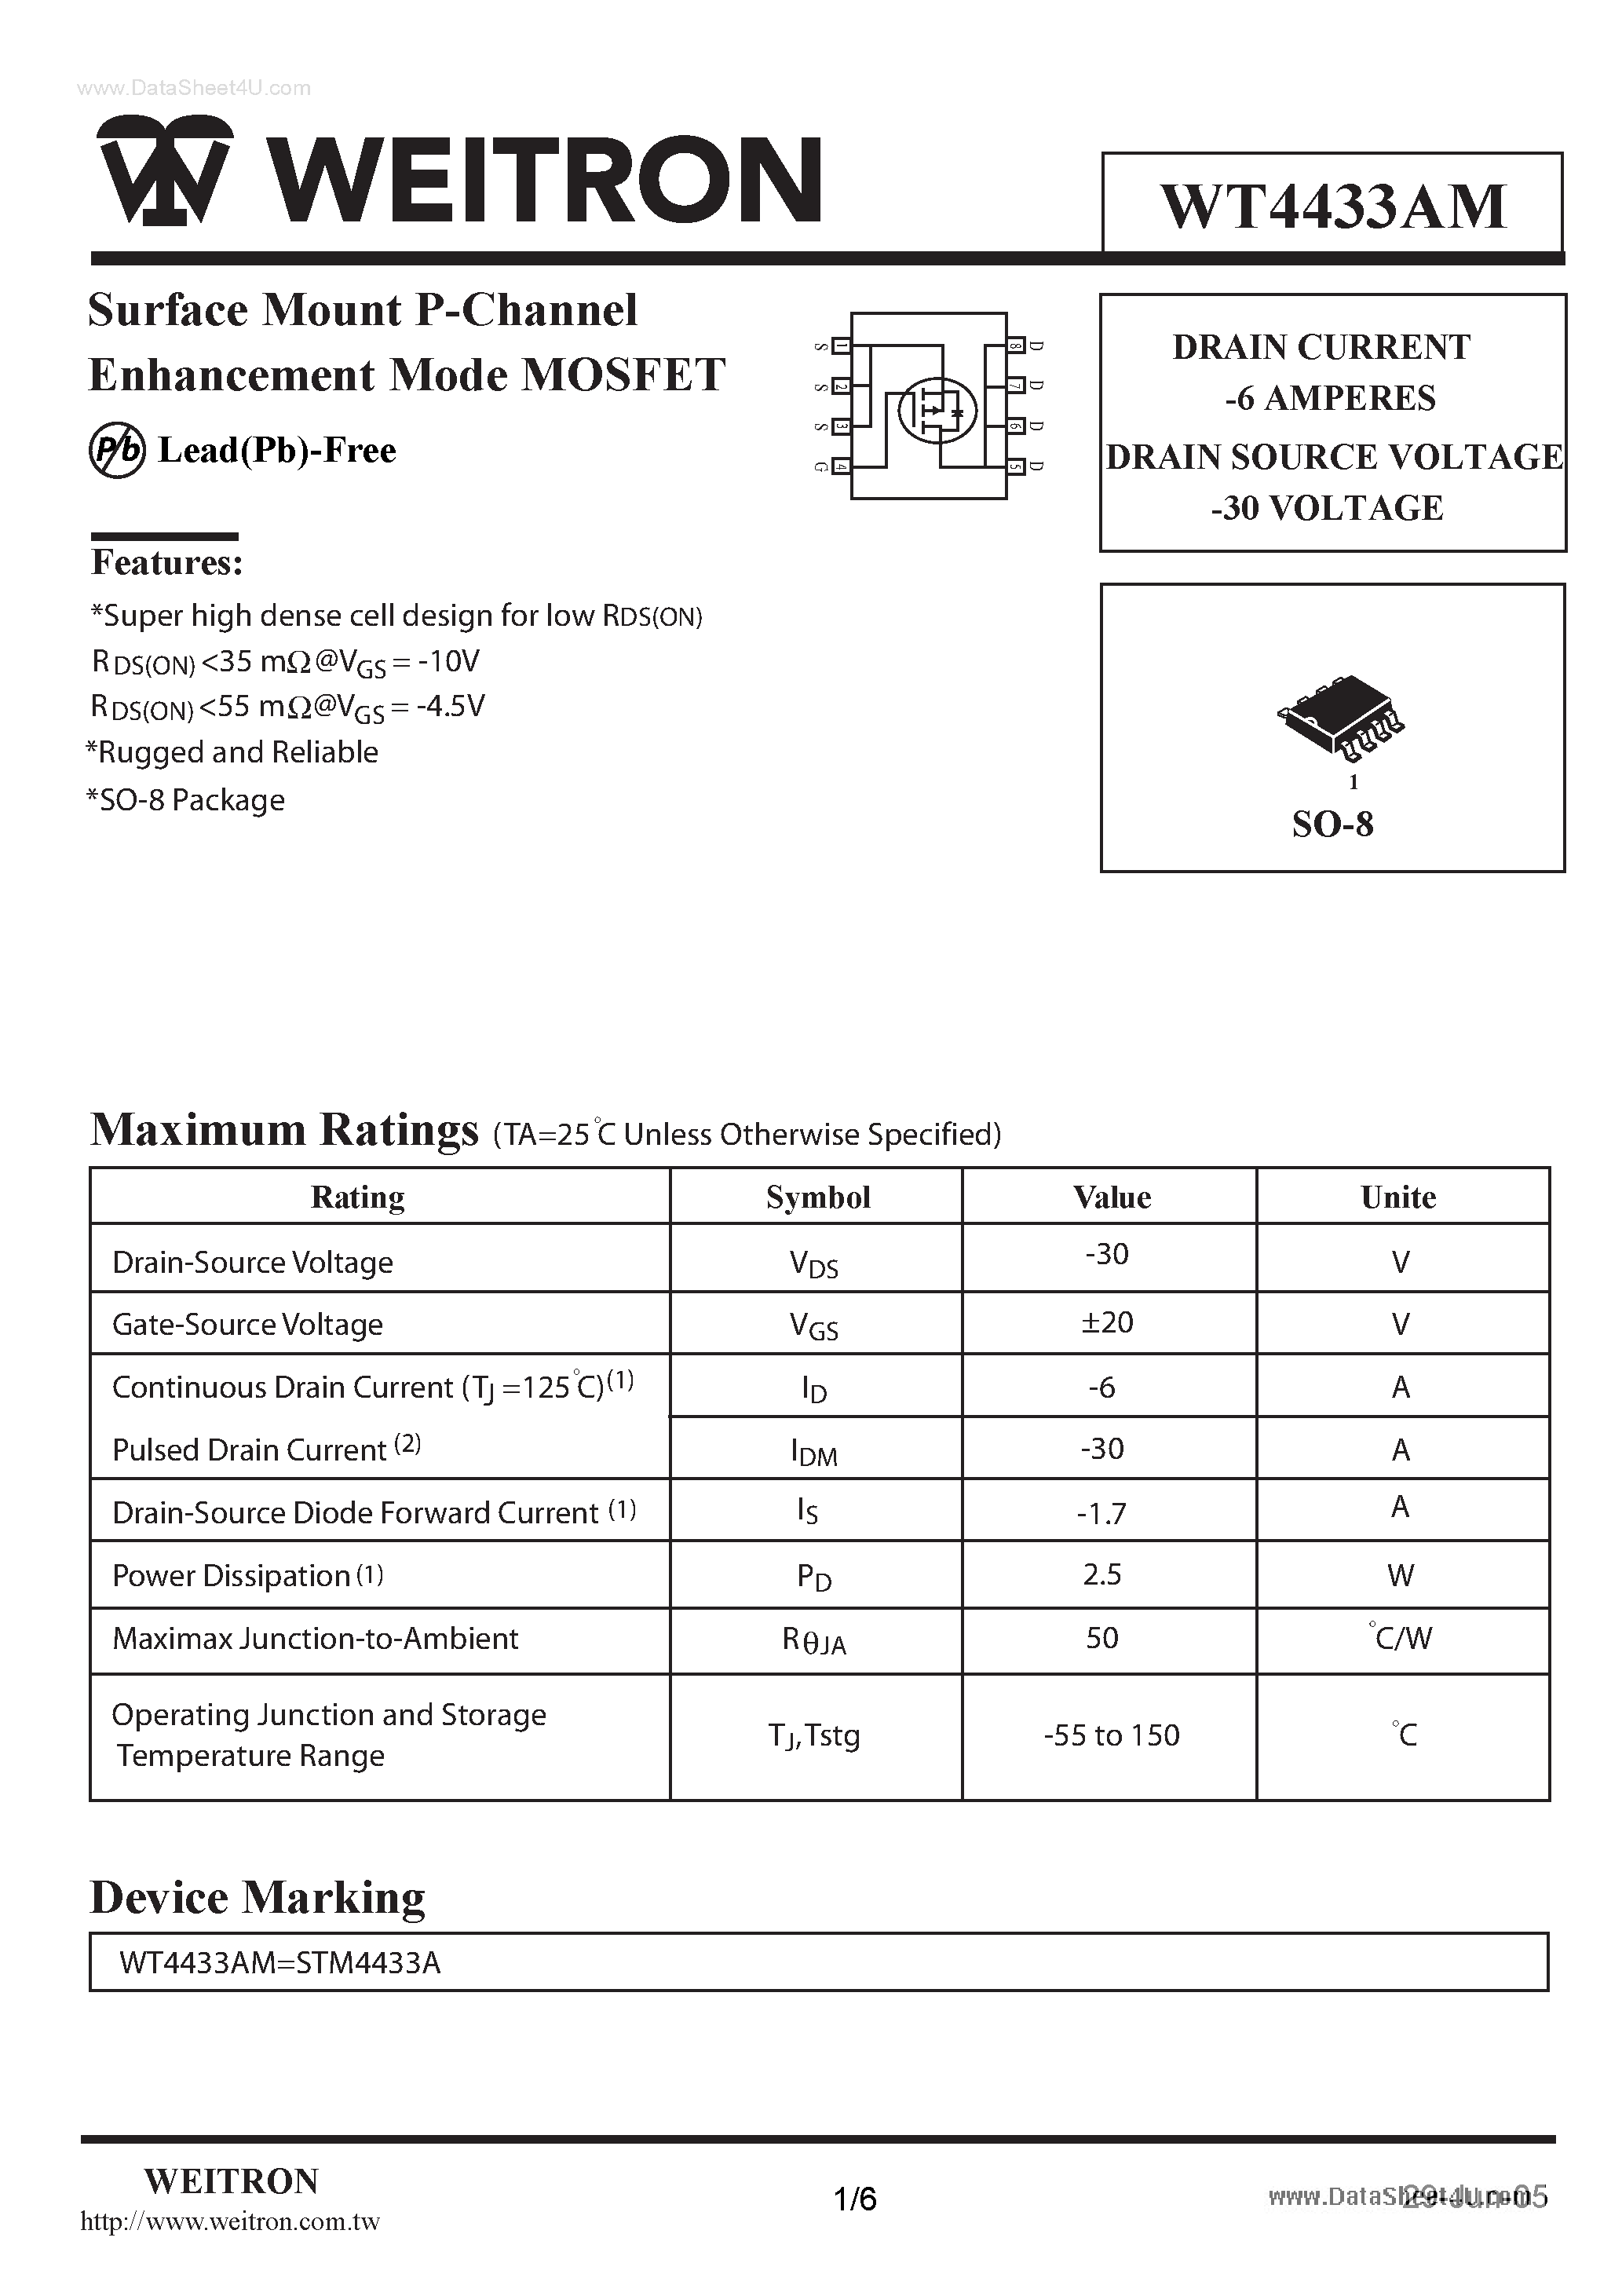 Даташит WT4433AM - Surface Mount P-Channel Enhancement Mode MOSFET страница 1